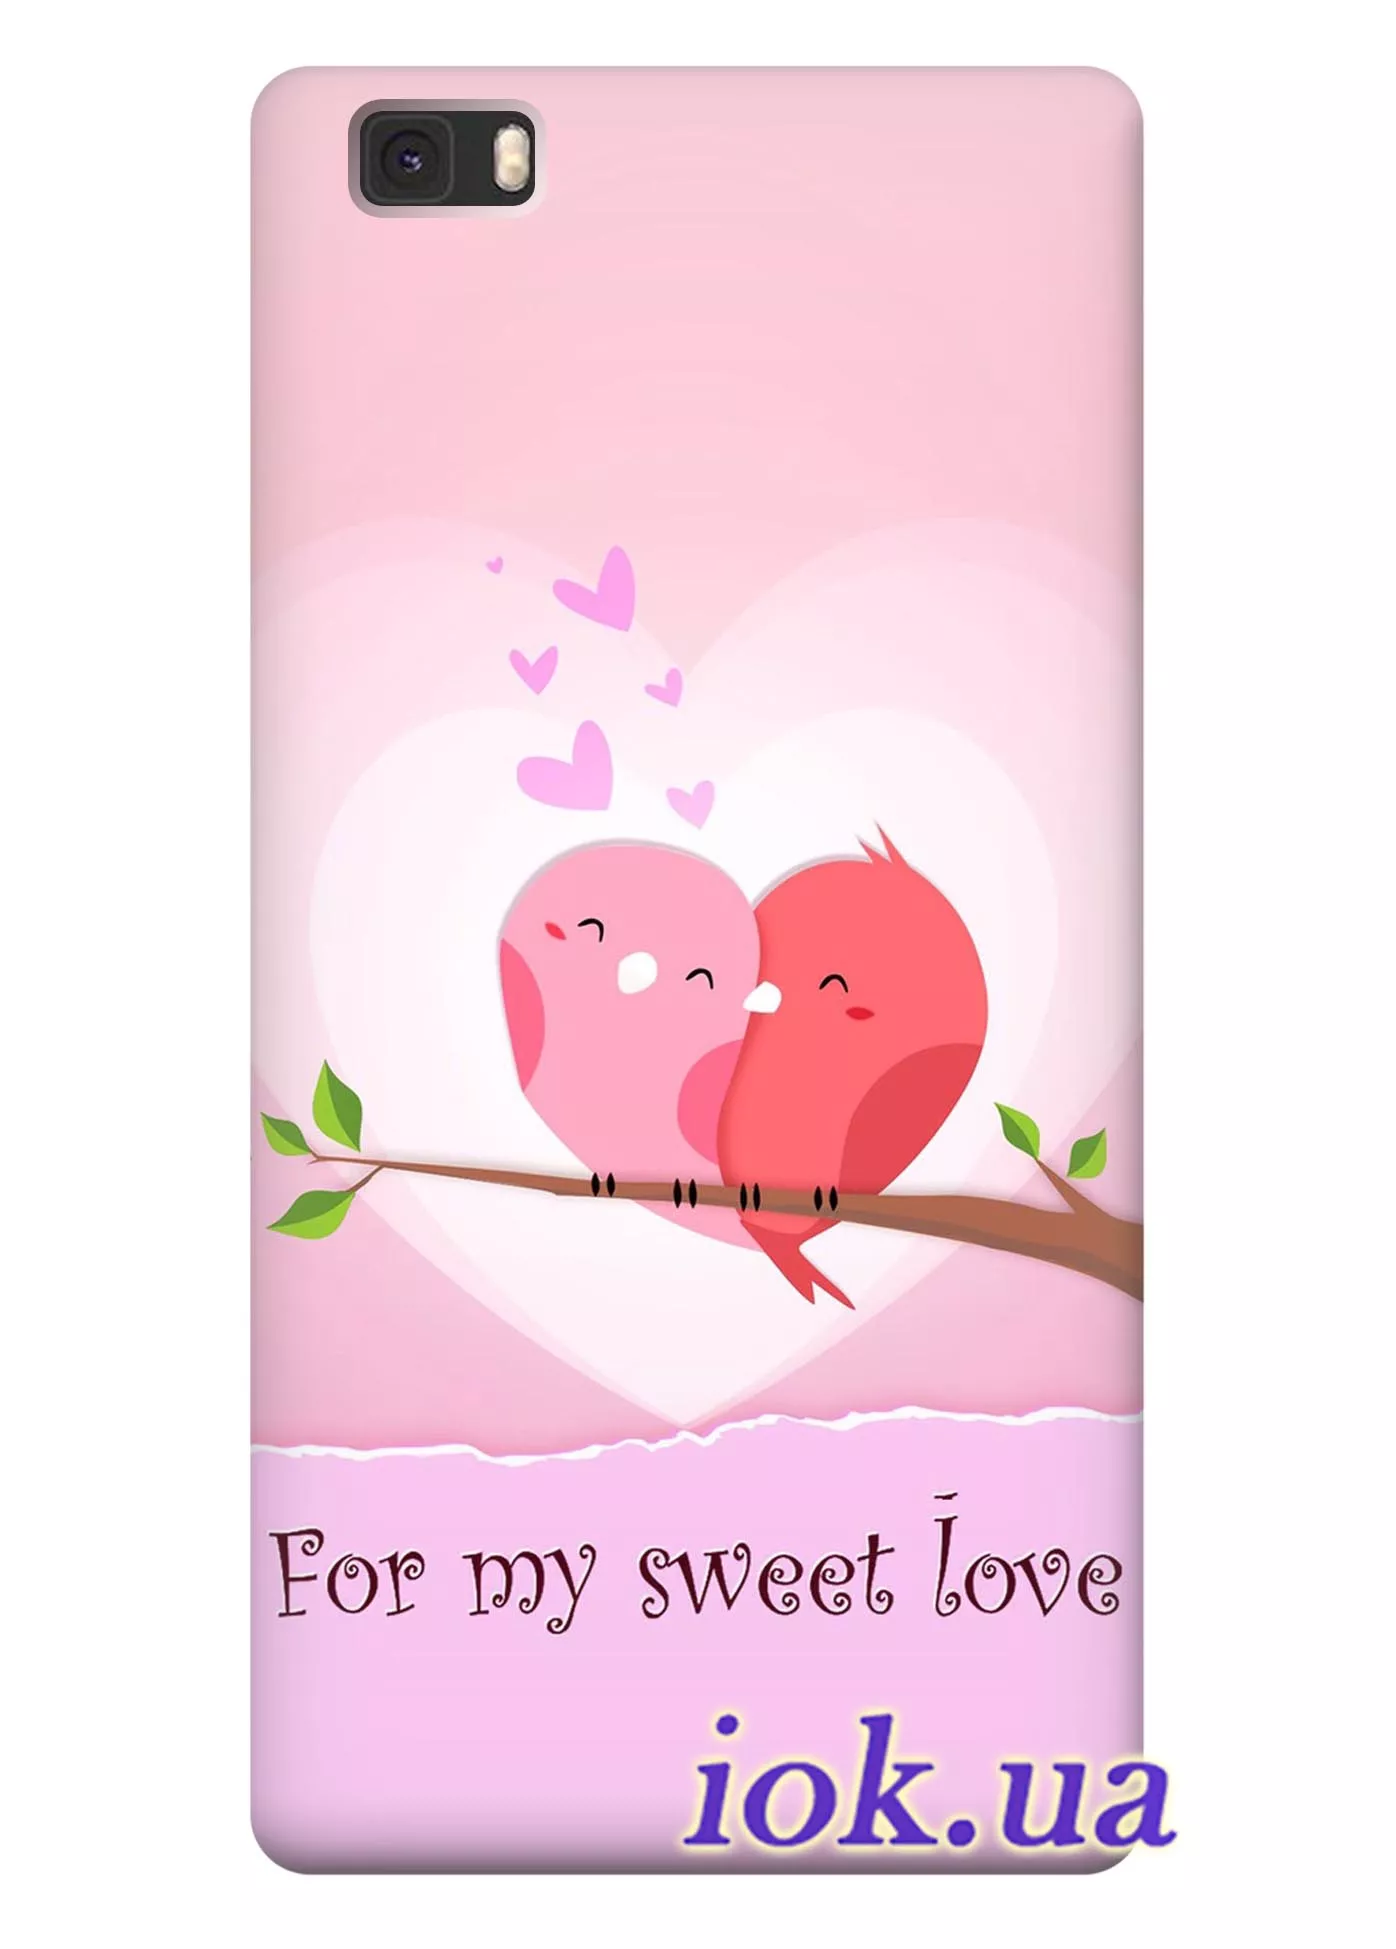 Чехол для Huawei P8 Lite - For my sweet love